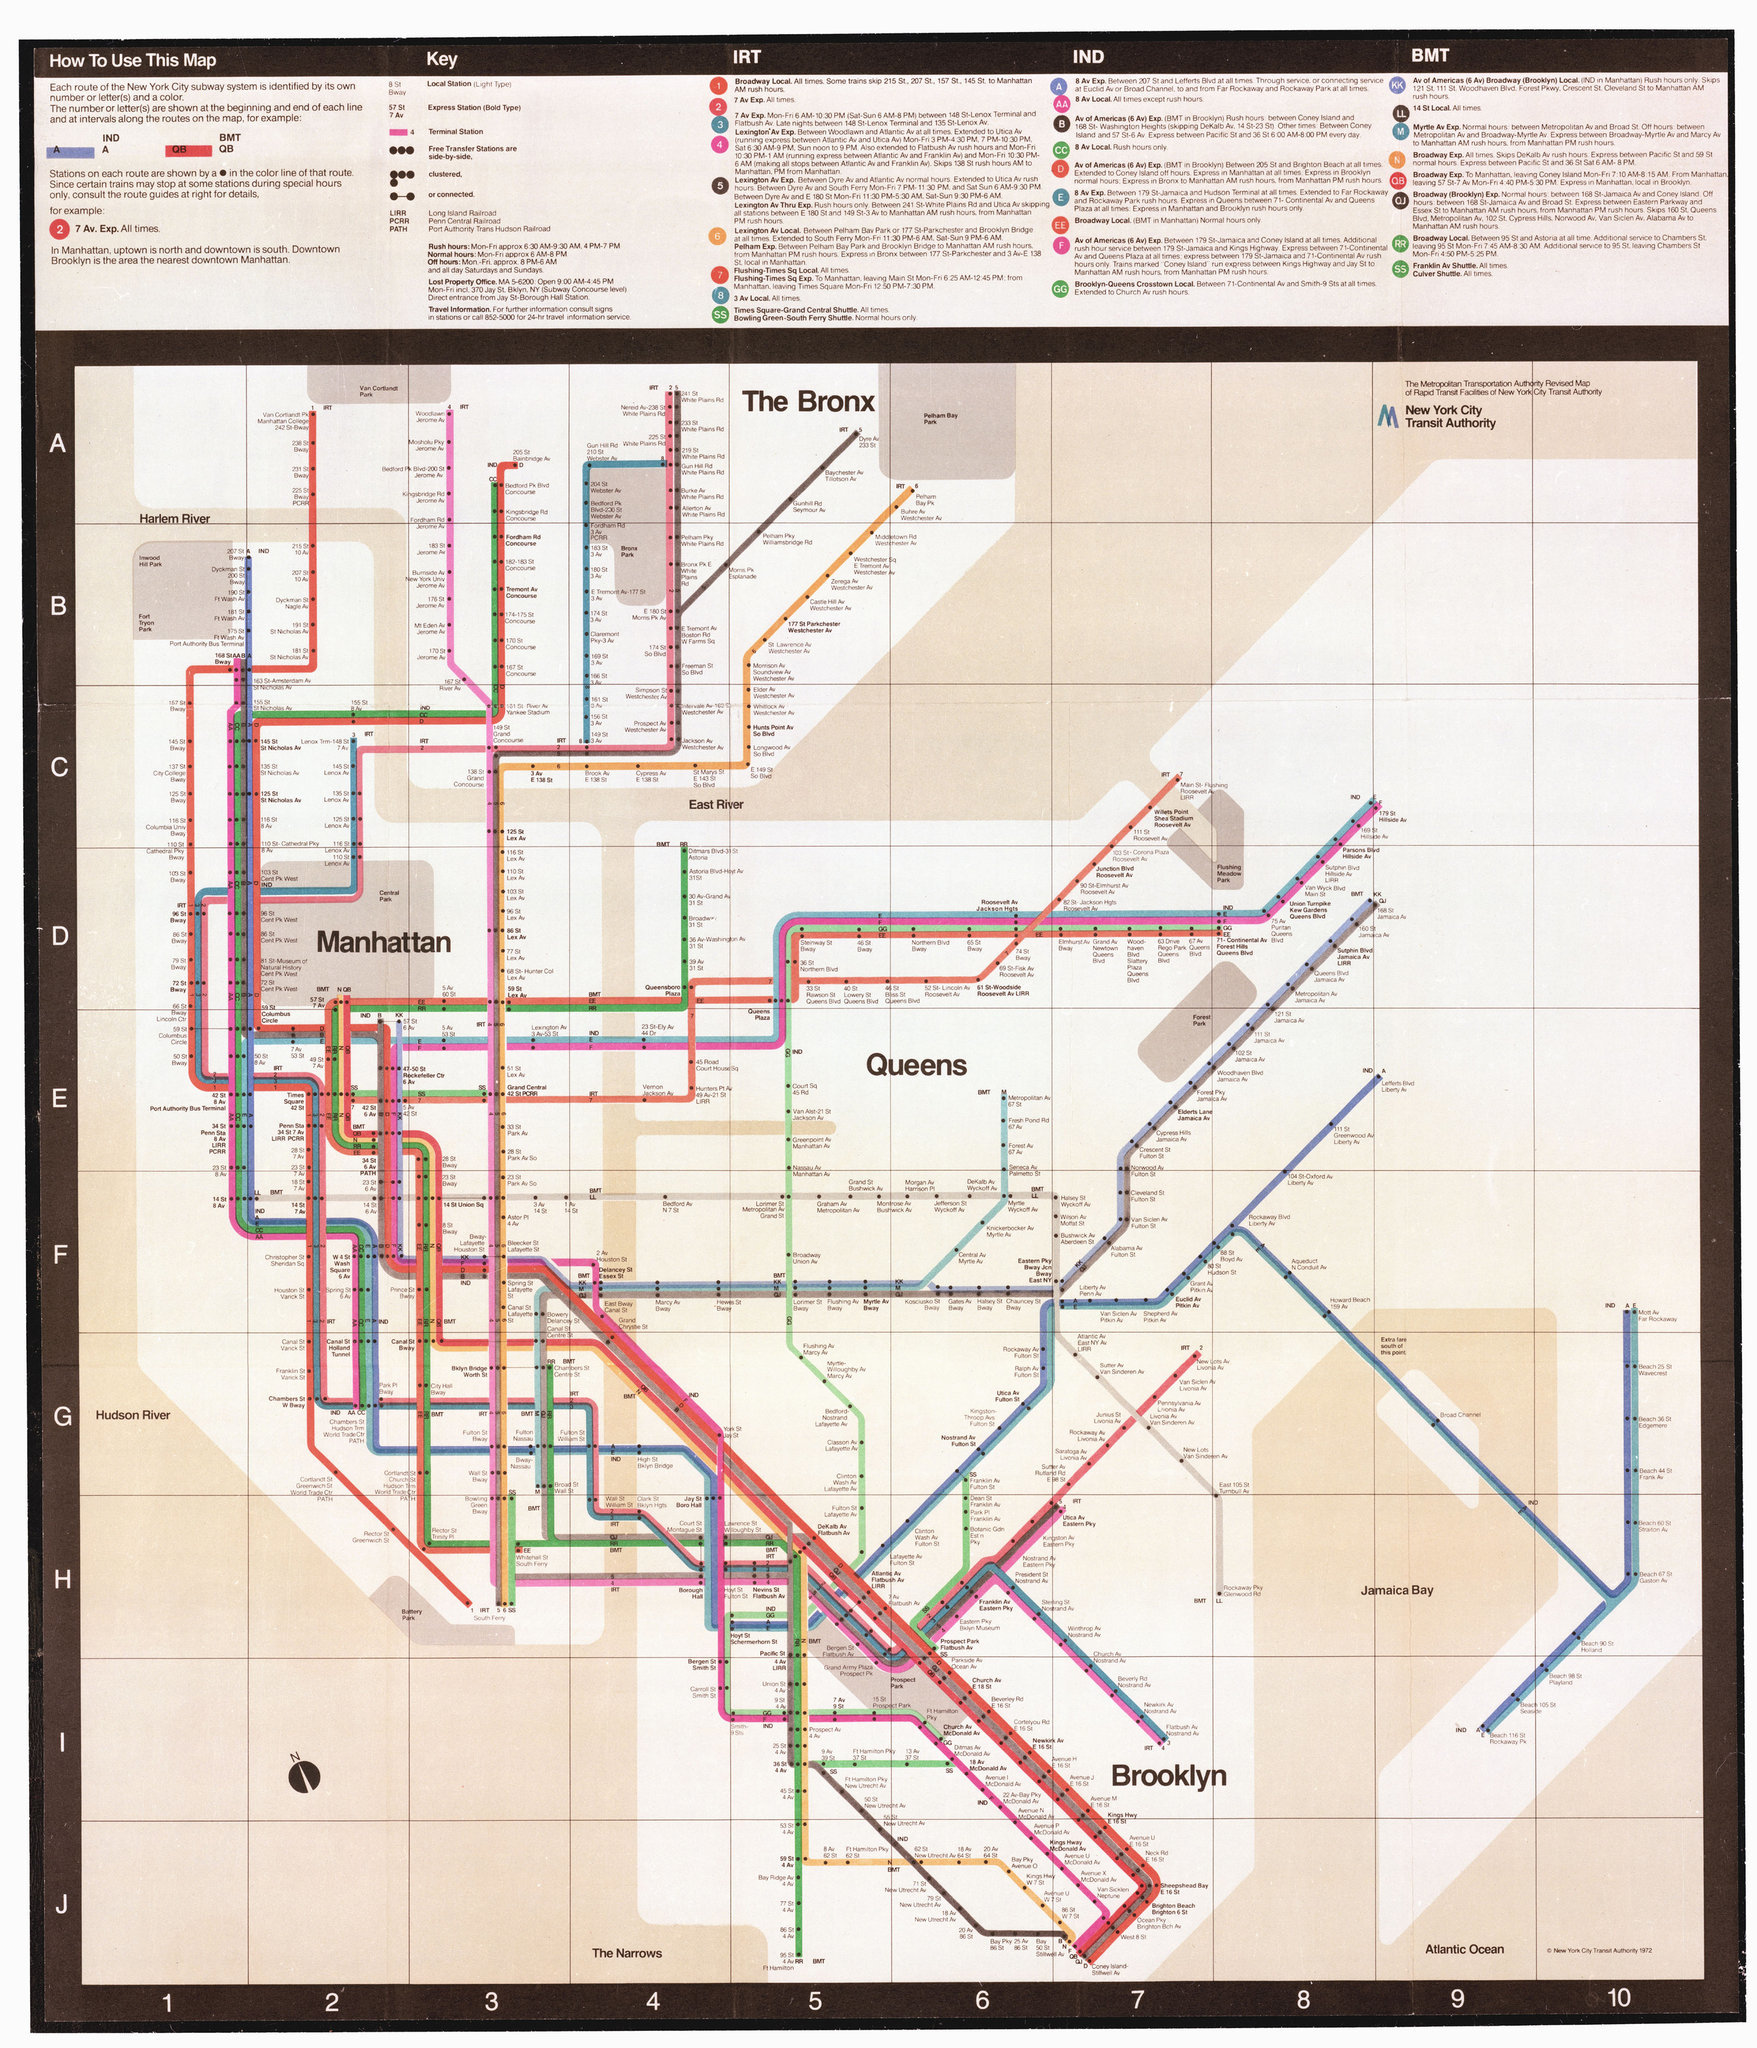 Massimo Vignelli's 1972 New York Subway Map